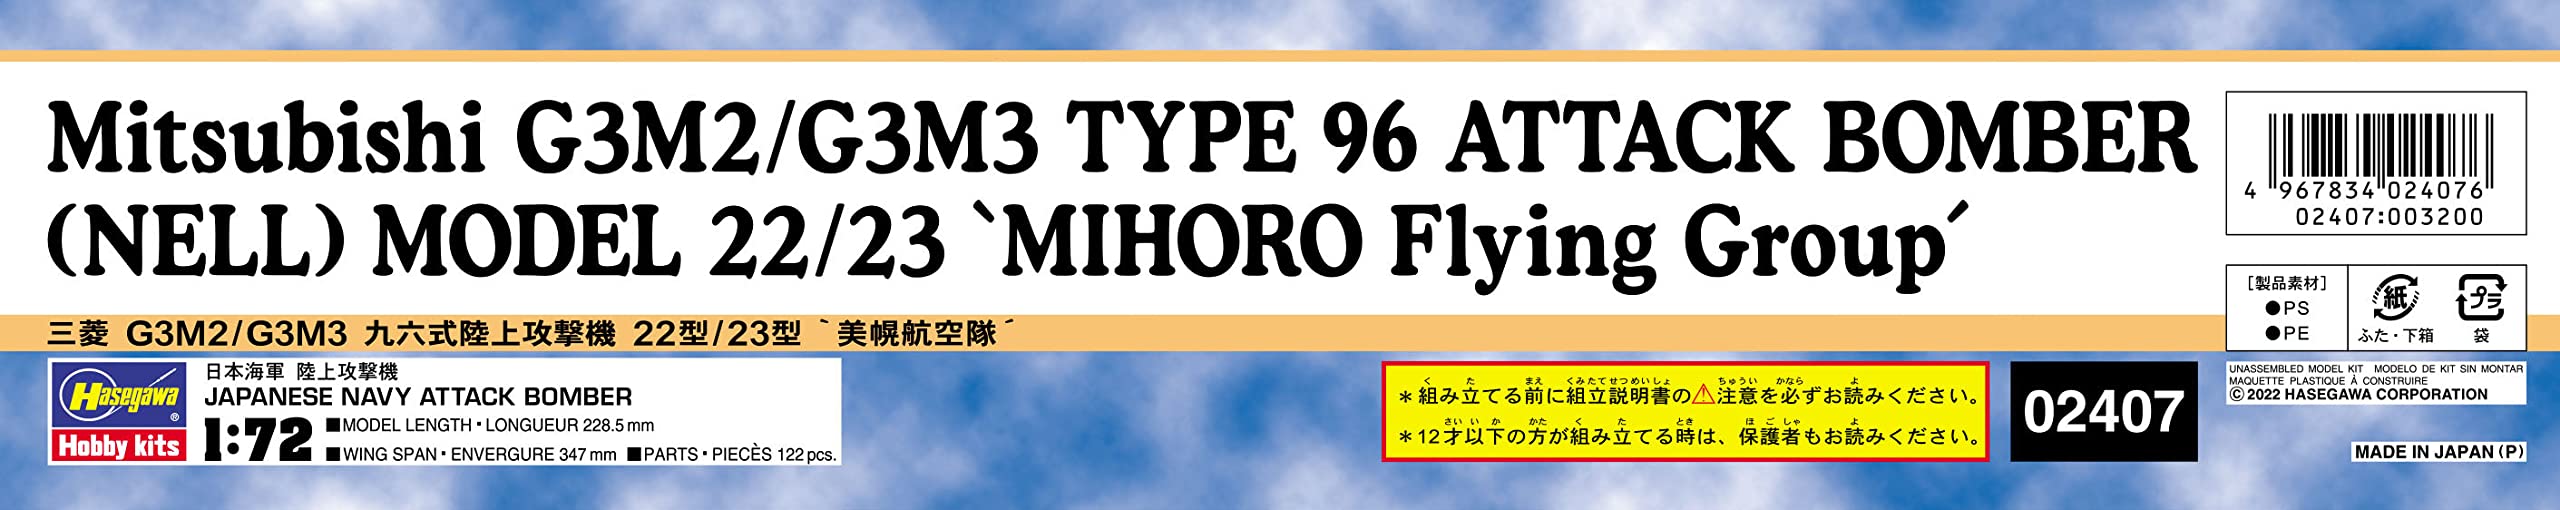 HASEGAWA 1/72 Mitsubishi G3M2/G3M3 Typ 96 Angriffsbomber Modell 22/23 'Bihoro Air Force' Plastikmodell